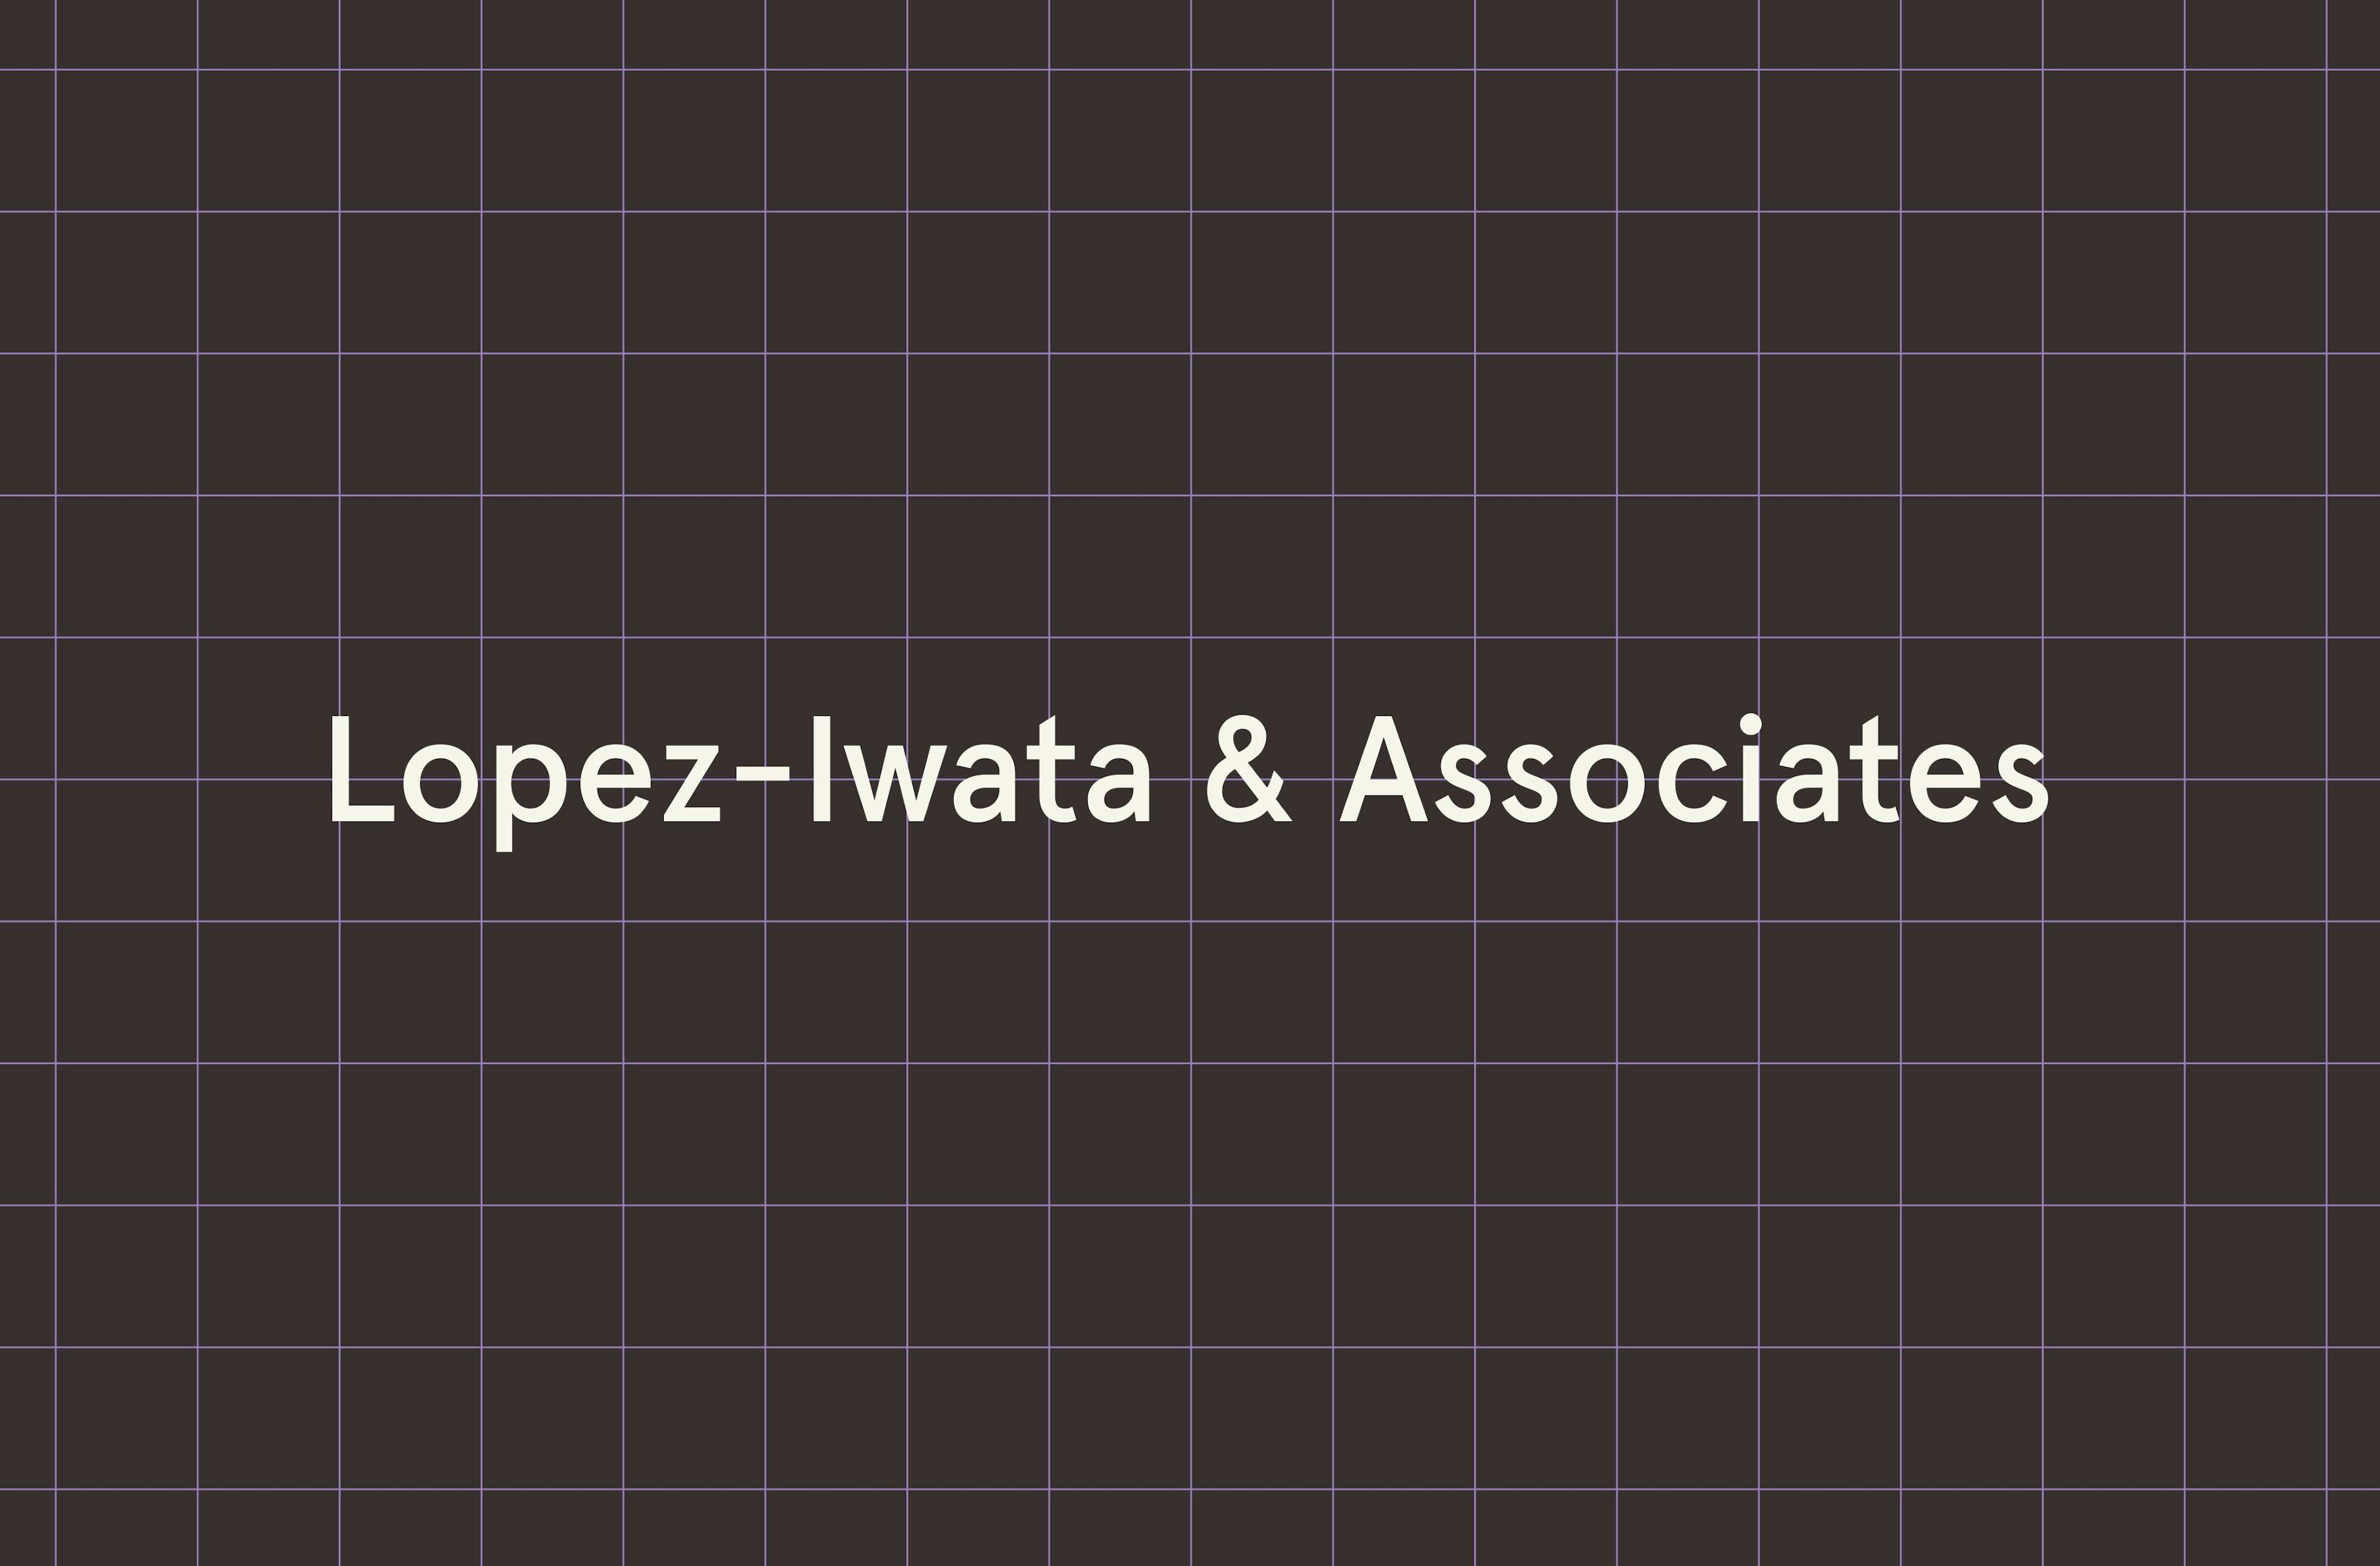 Lopeziwata brand identity